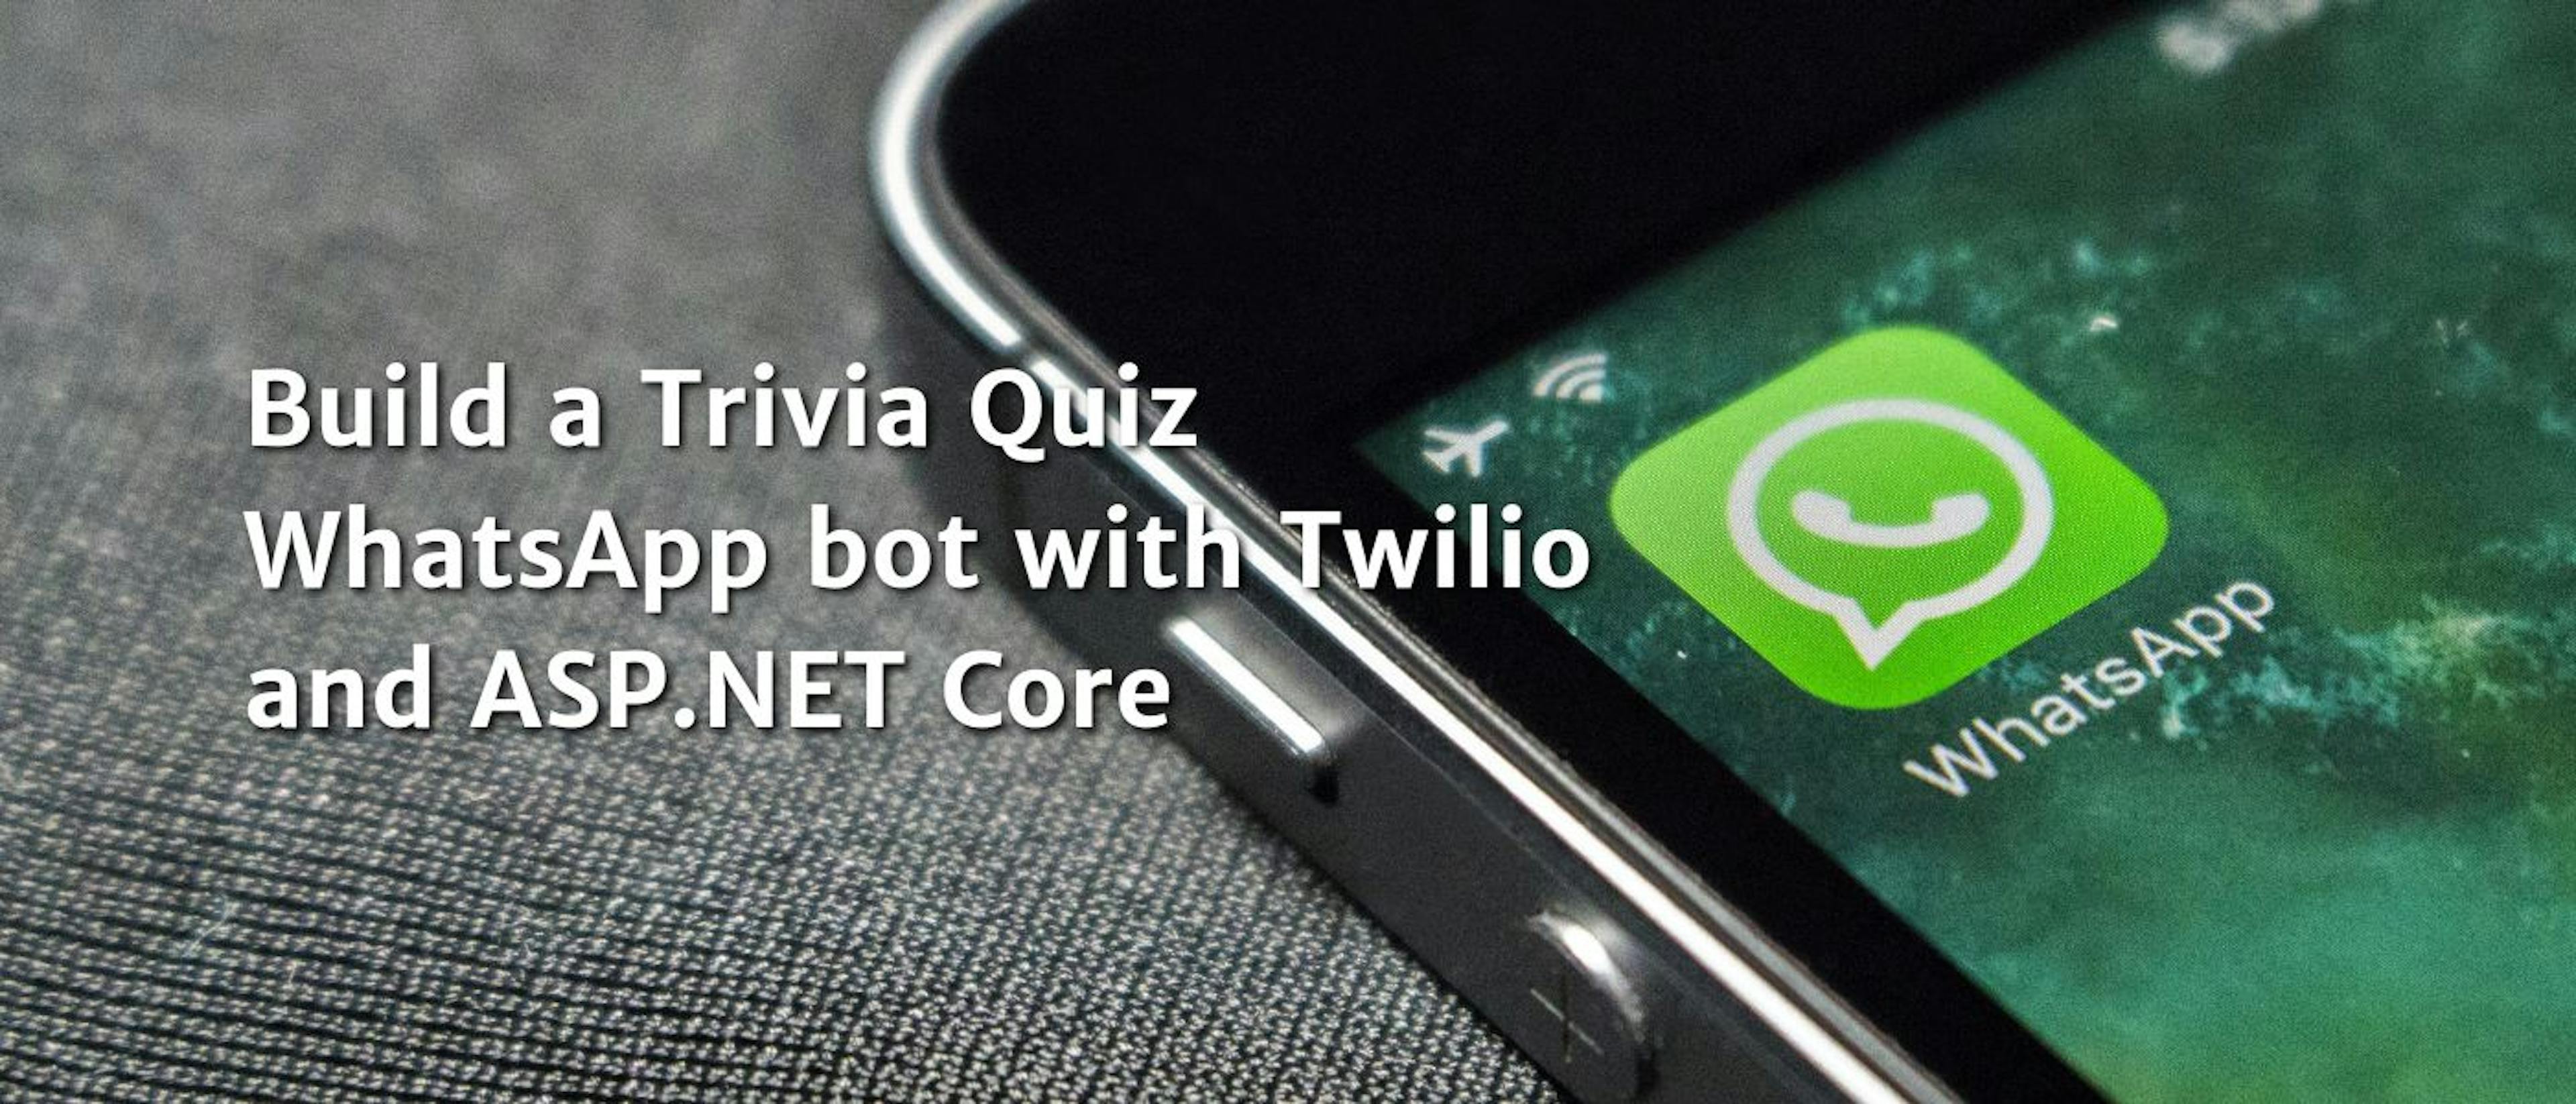 featured image - Twilio ve ASP.NET Core ile Trivia Quiz WhatsApp Botu Oluşturun